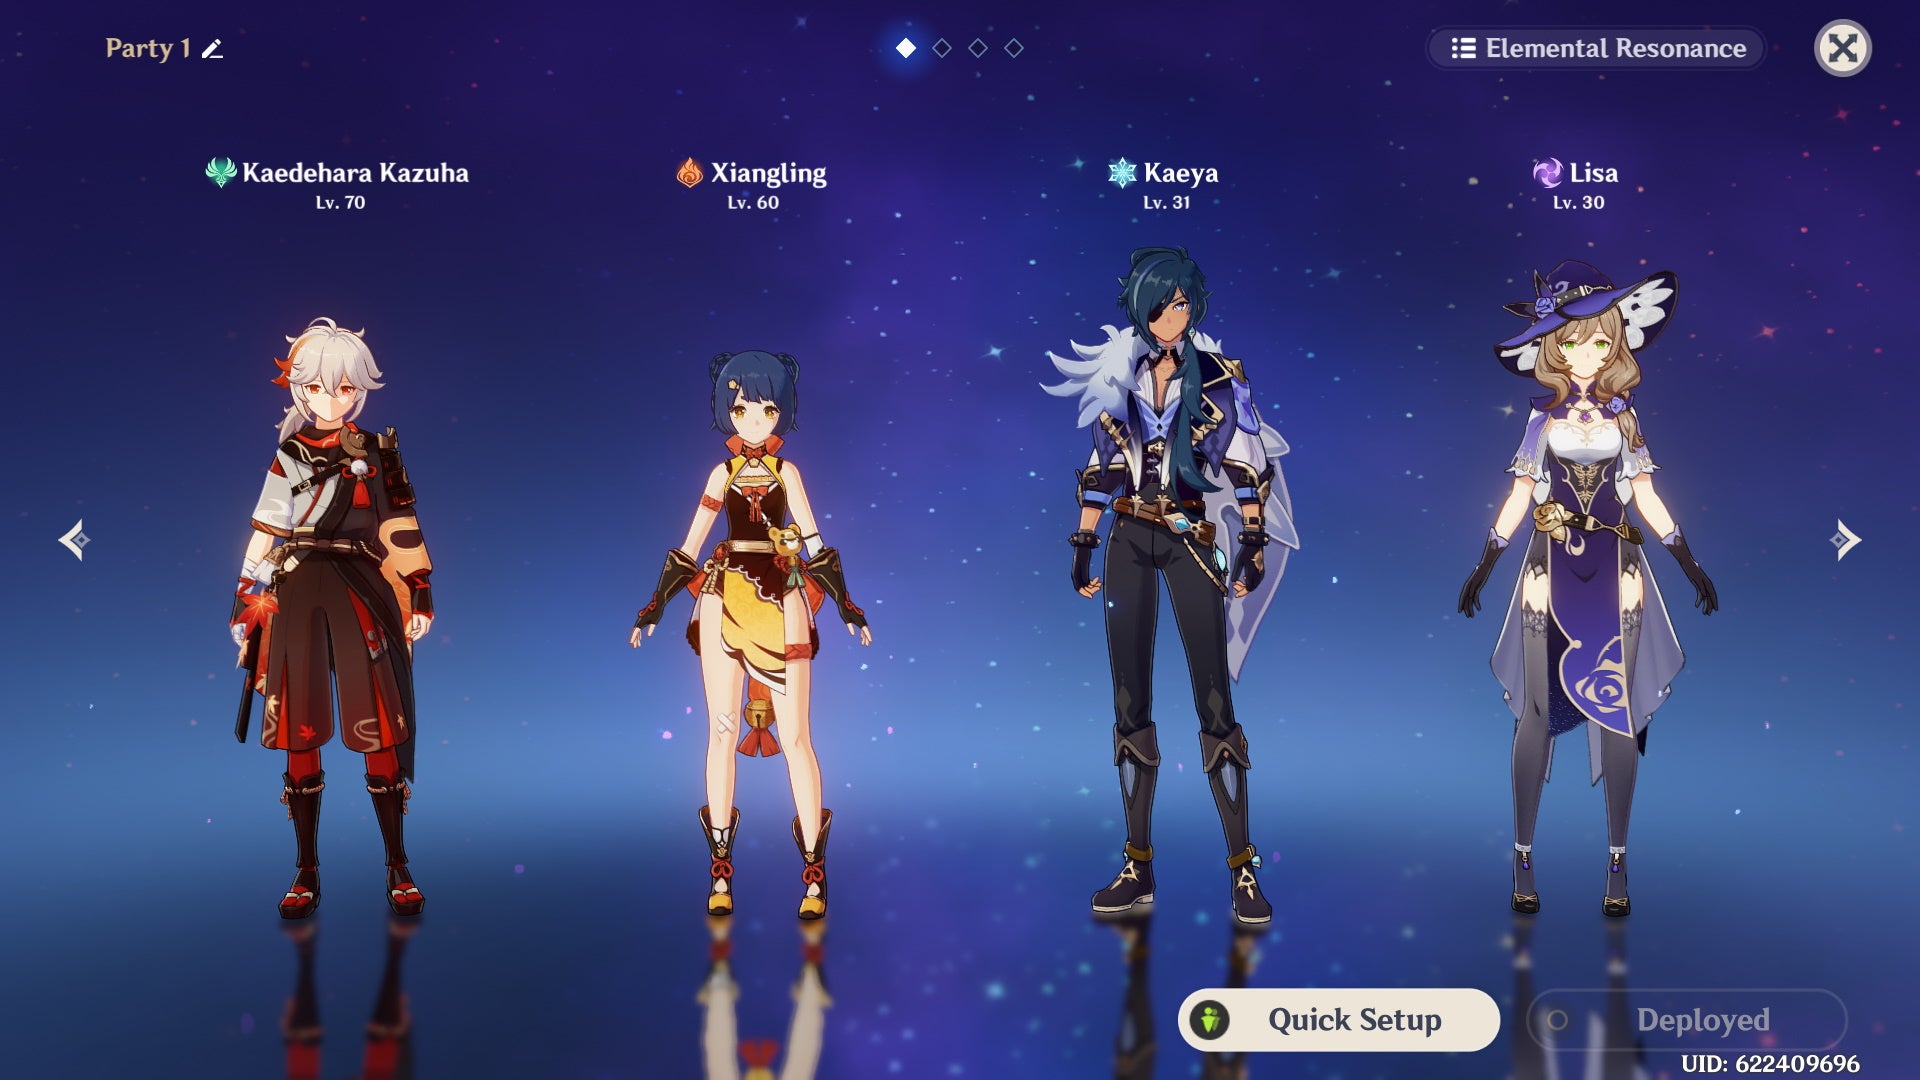 A F2P team for Kazuha with Xiangling, Kaeya, and Lisa